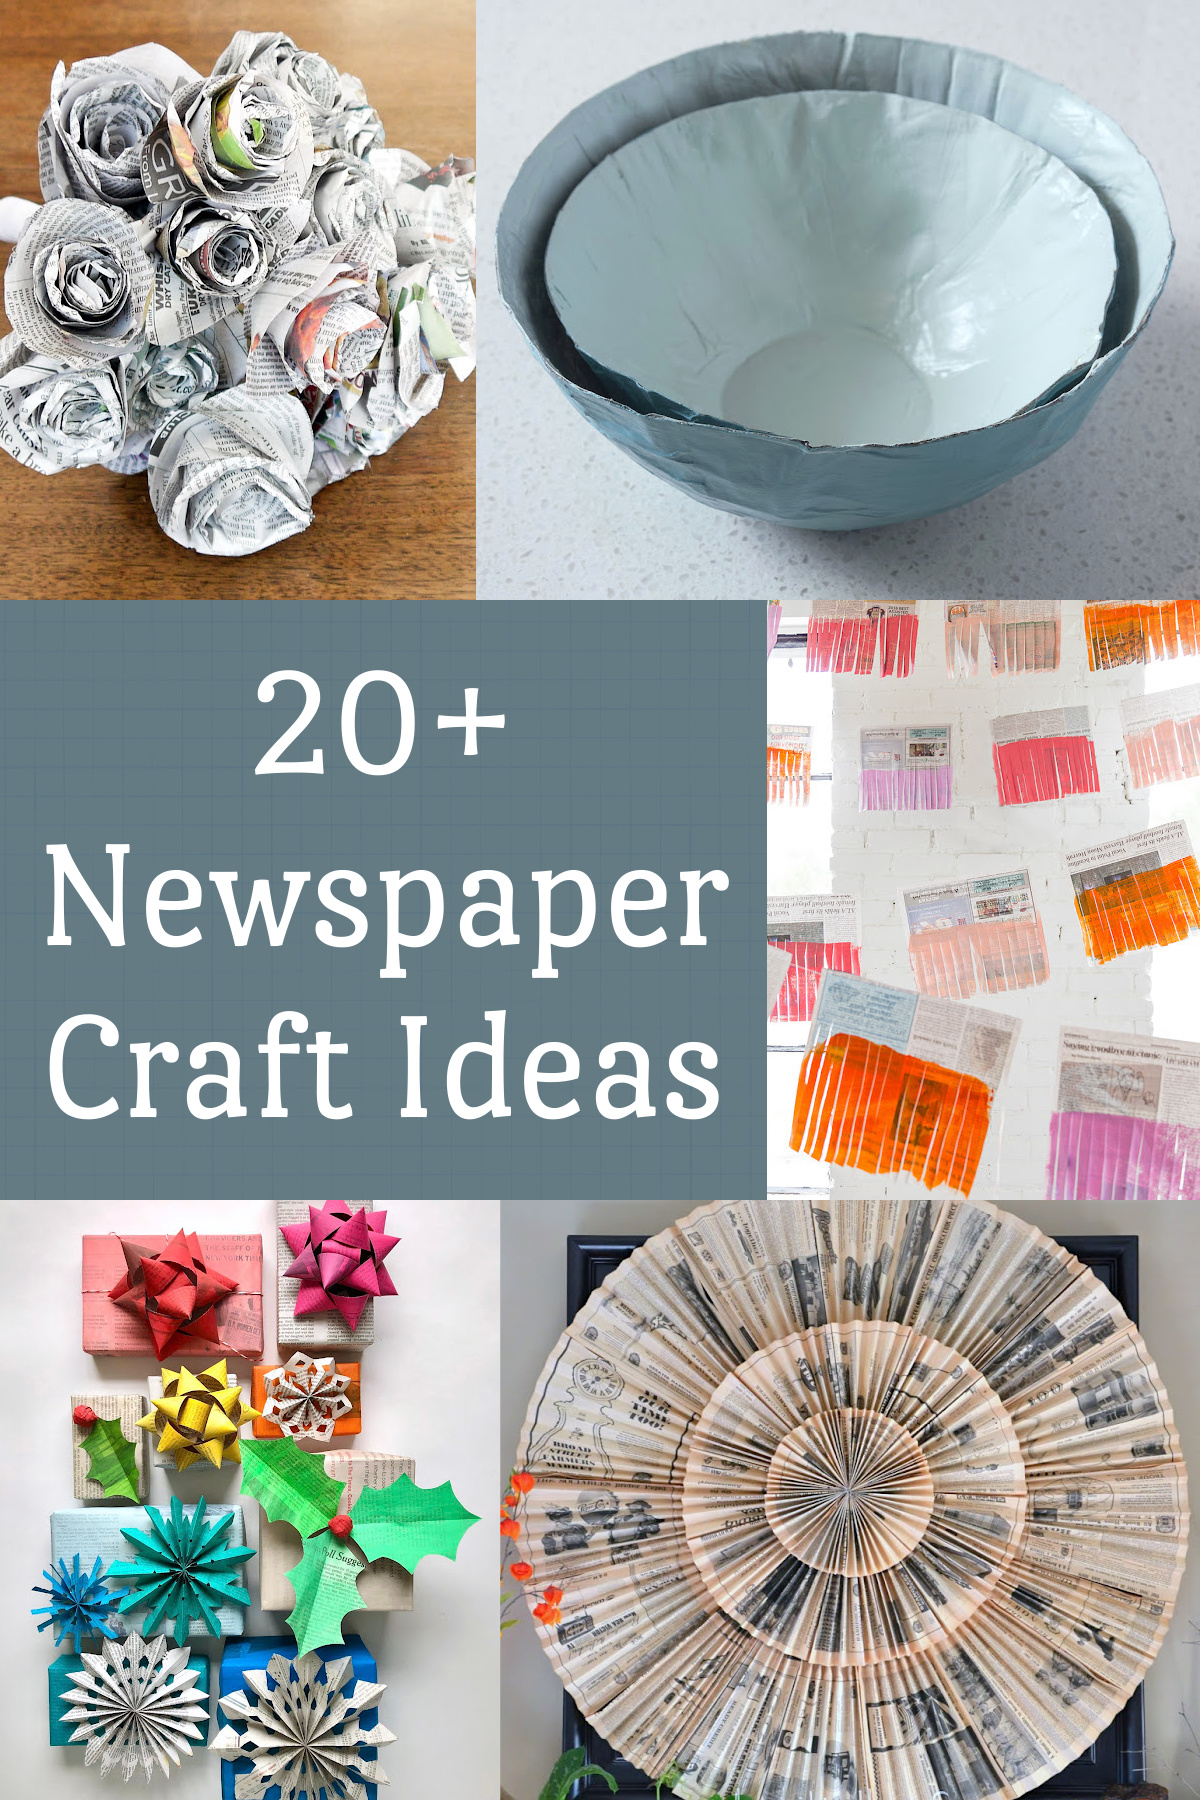 Craft ideas with newspaper